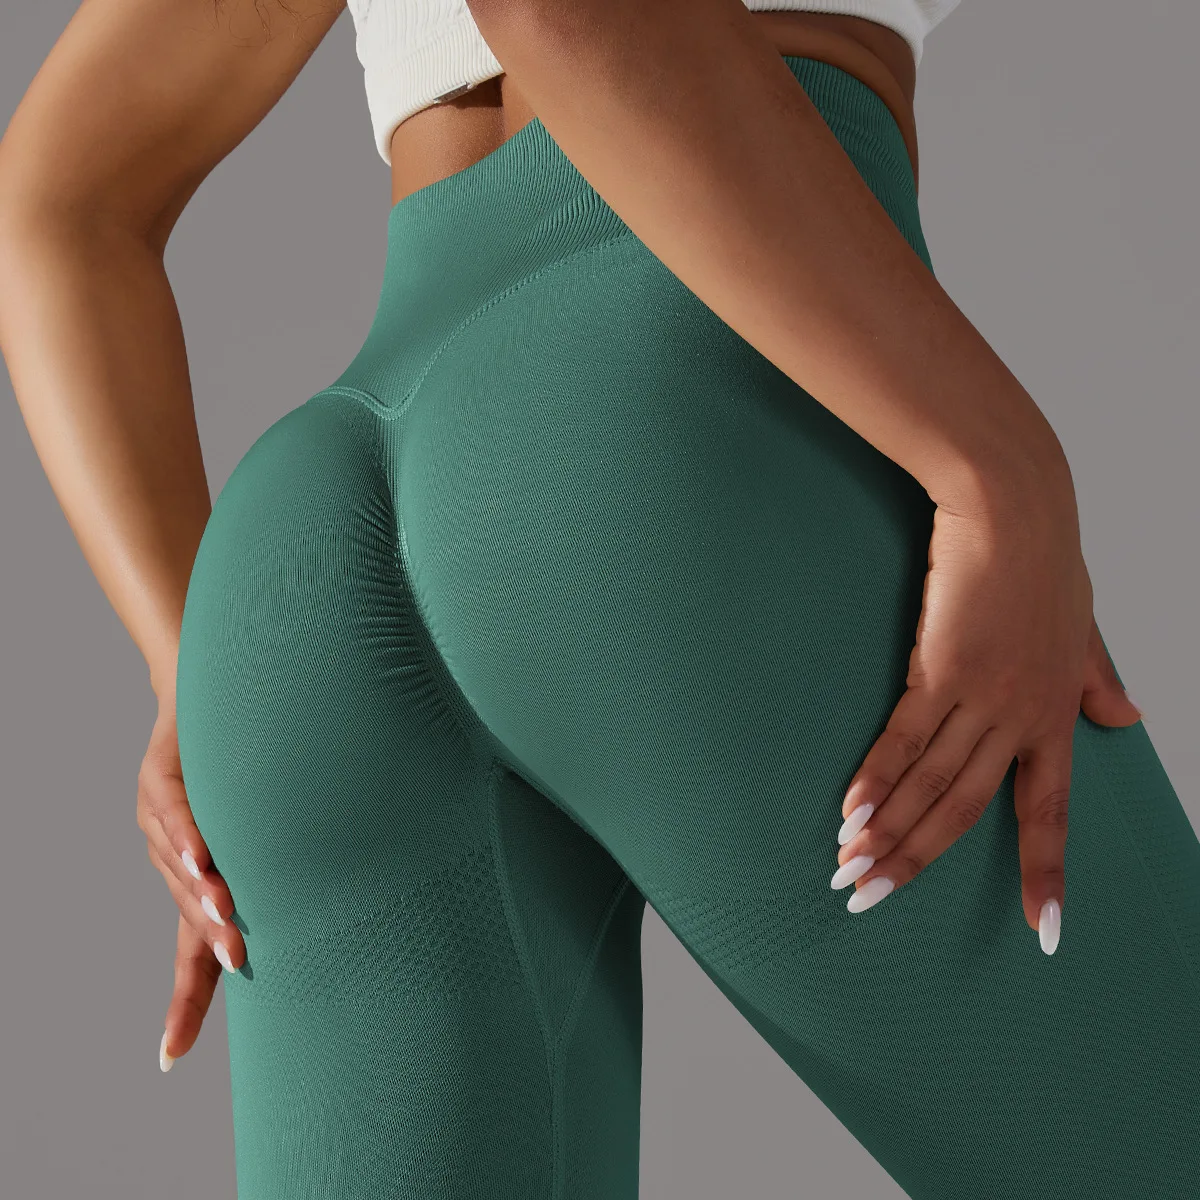 Hottest Selling Yoga Wear Women's Soft Comfort Seamless Knitted Scrunch Bum Yoga Performance Gym Leggings